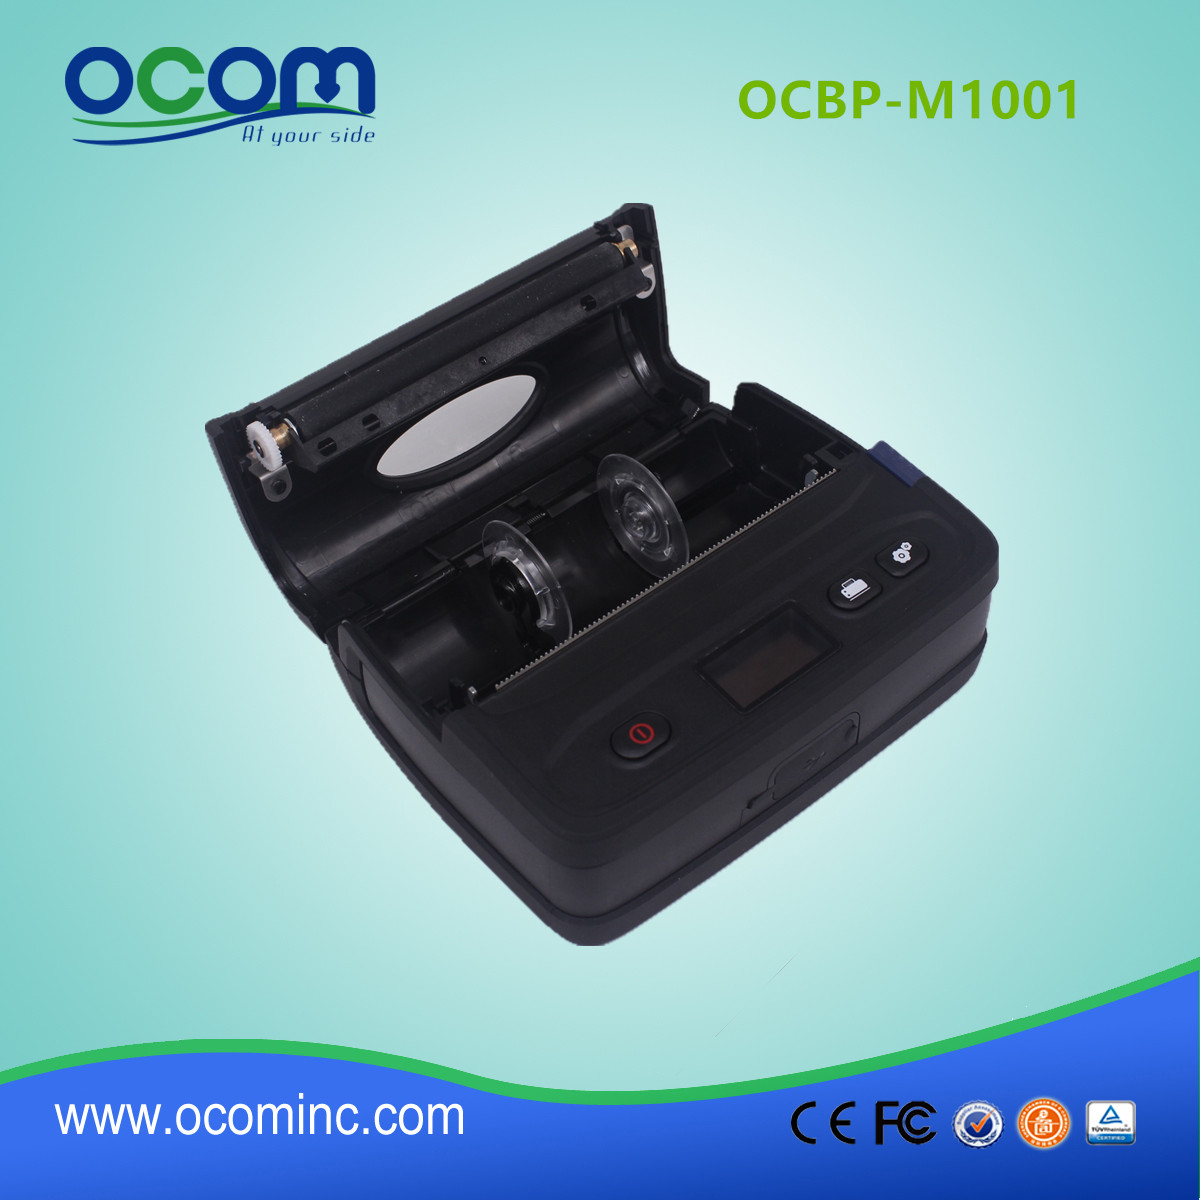 4" Portable Bluetooth Thermal barcode label printer-OCBP-M1001